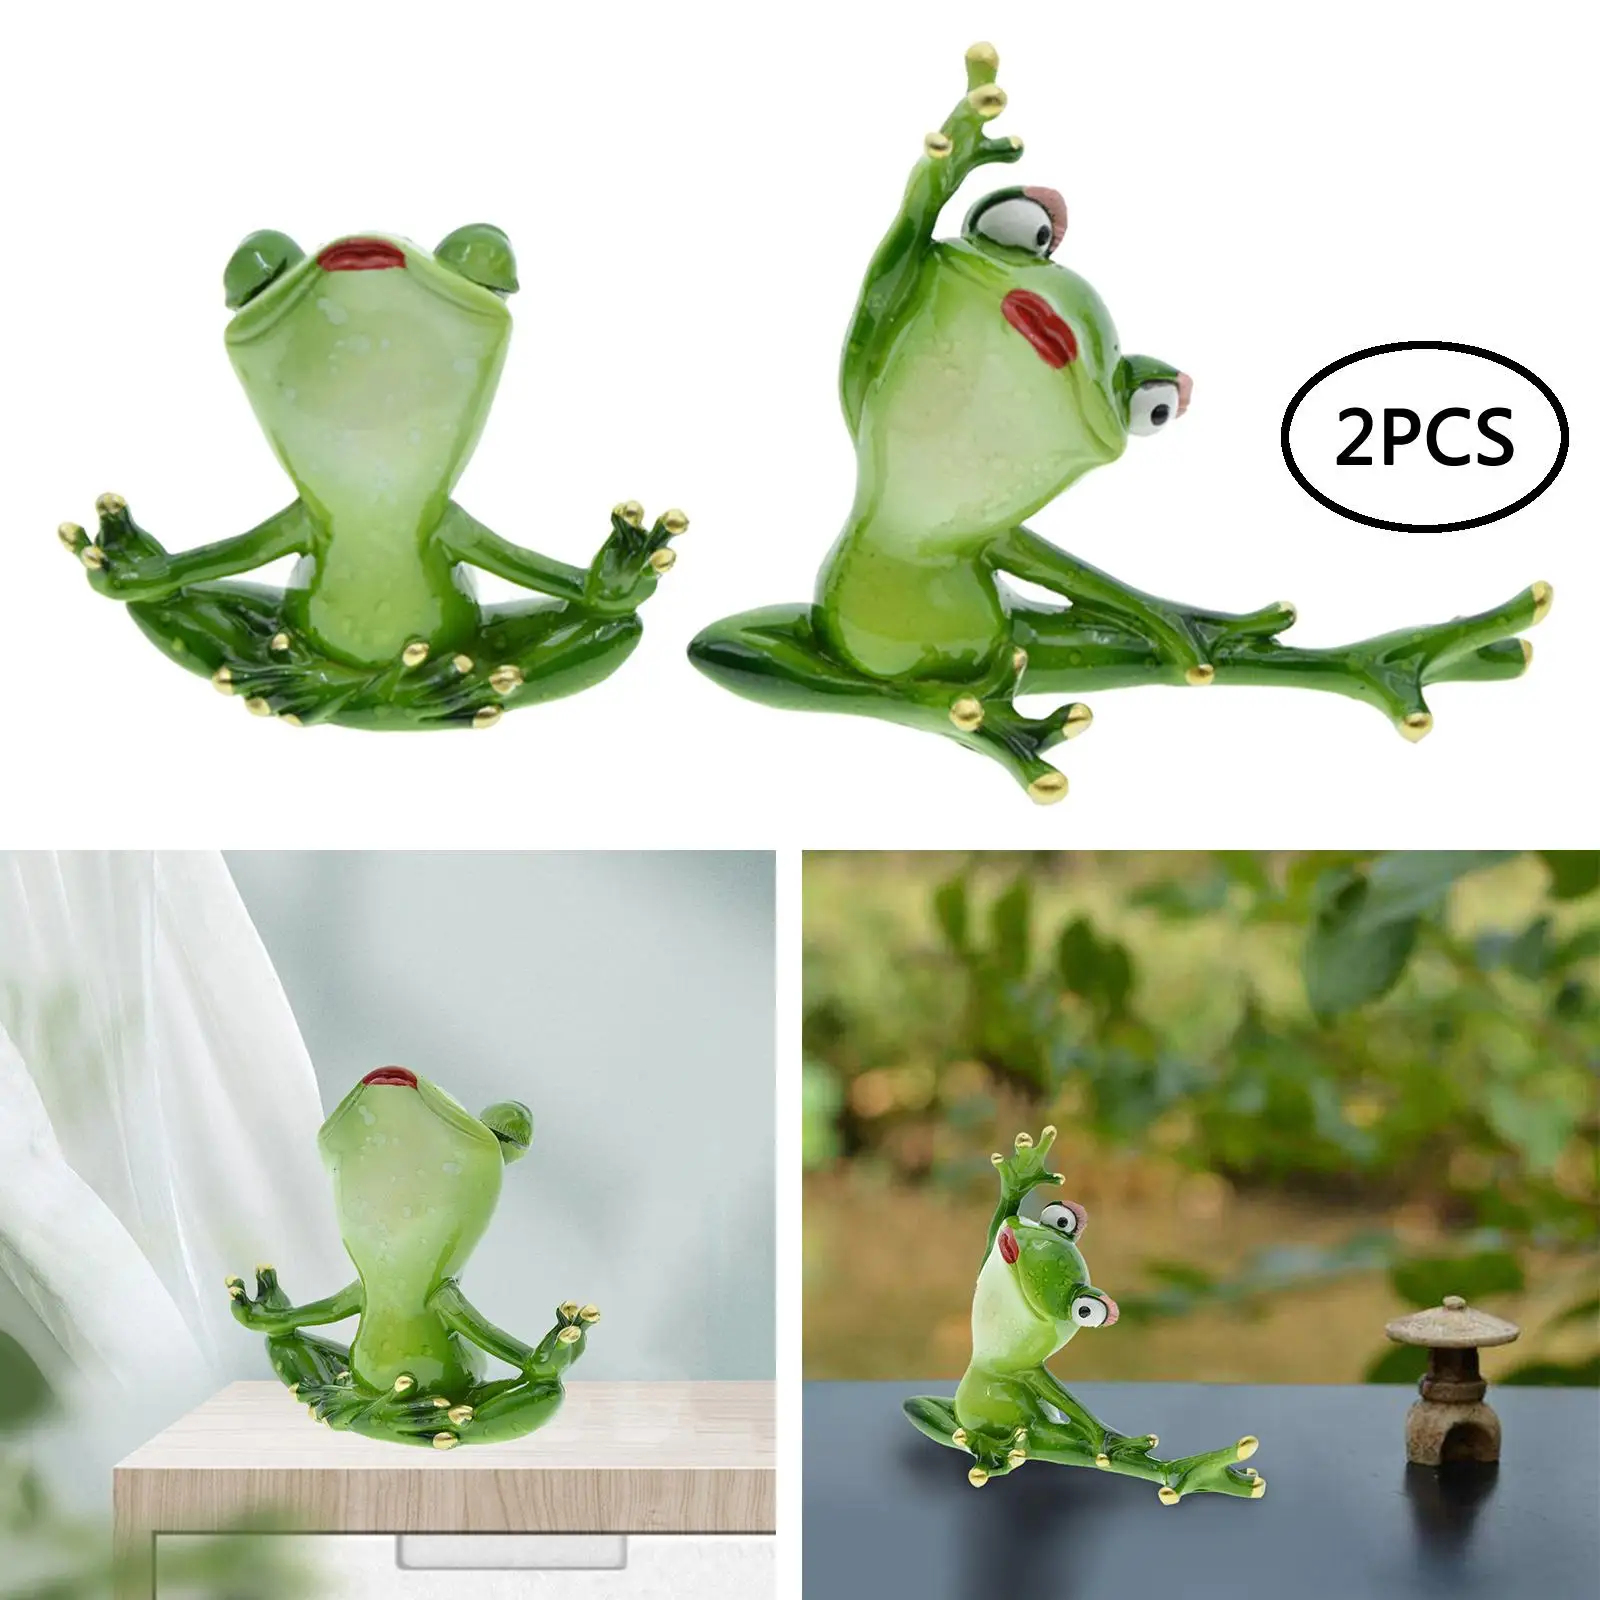 2Pcs Resin Yoga Frog Figurine Statue Sculpture Model Art Crafts for Table Shopwindow Office Photo Props Bookshelf Bedroom Decor